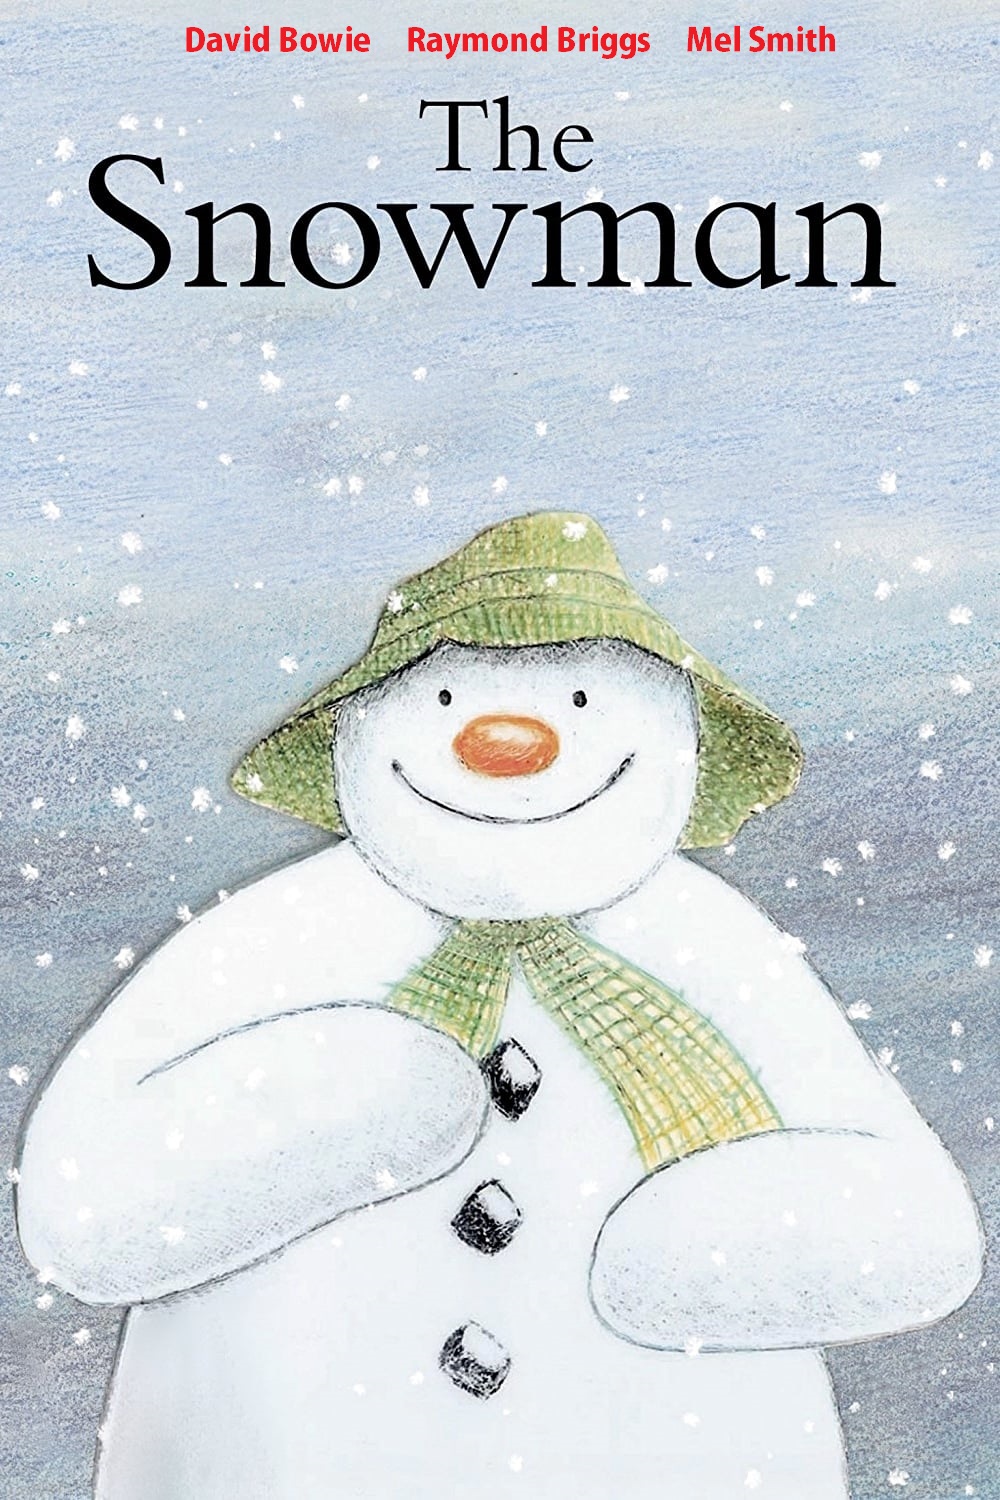 EN - The Snowman (1982)